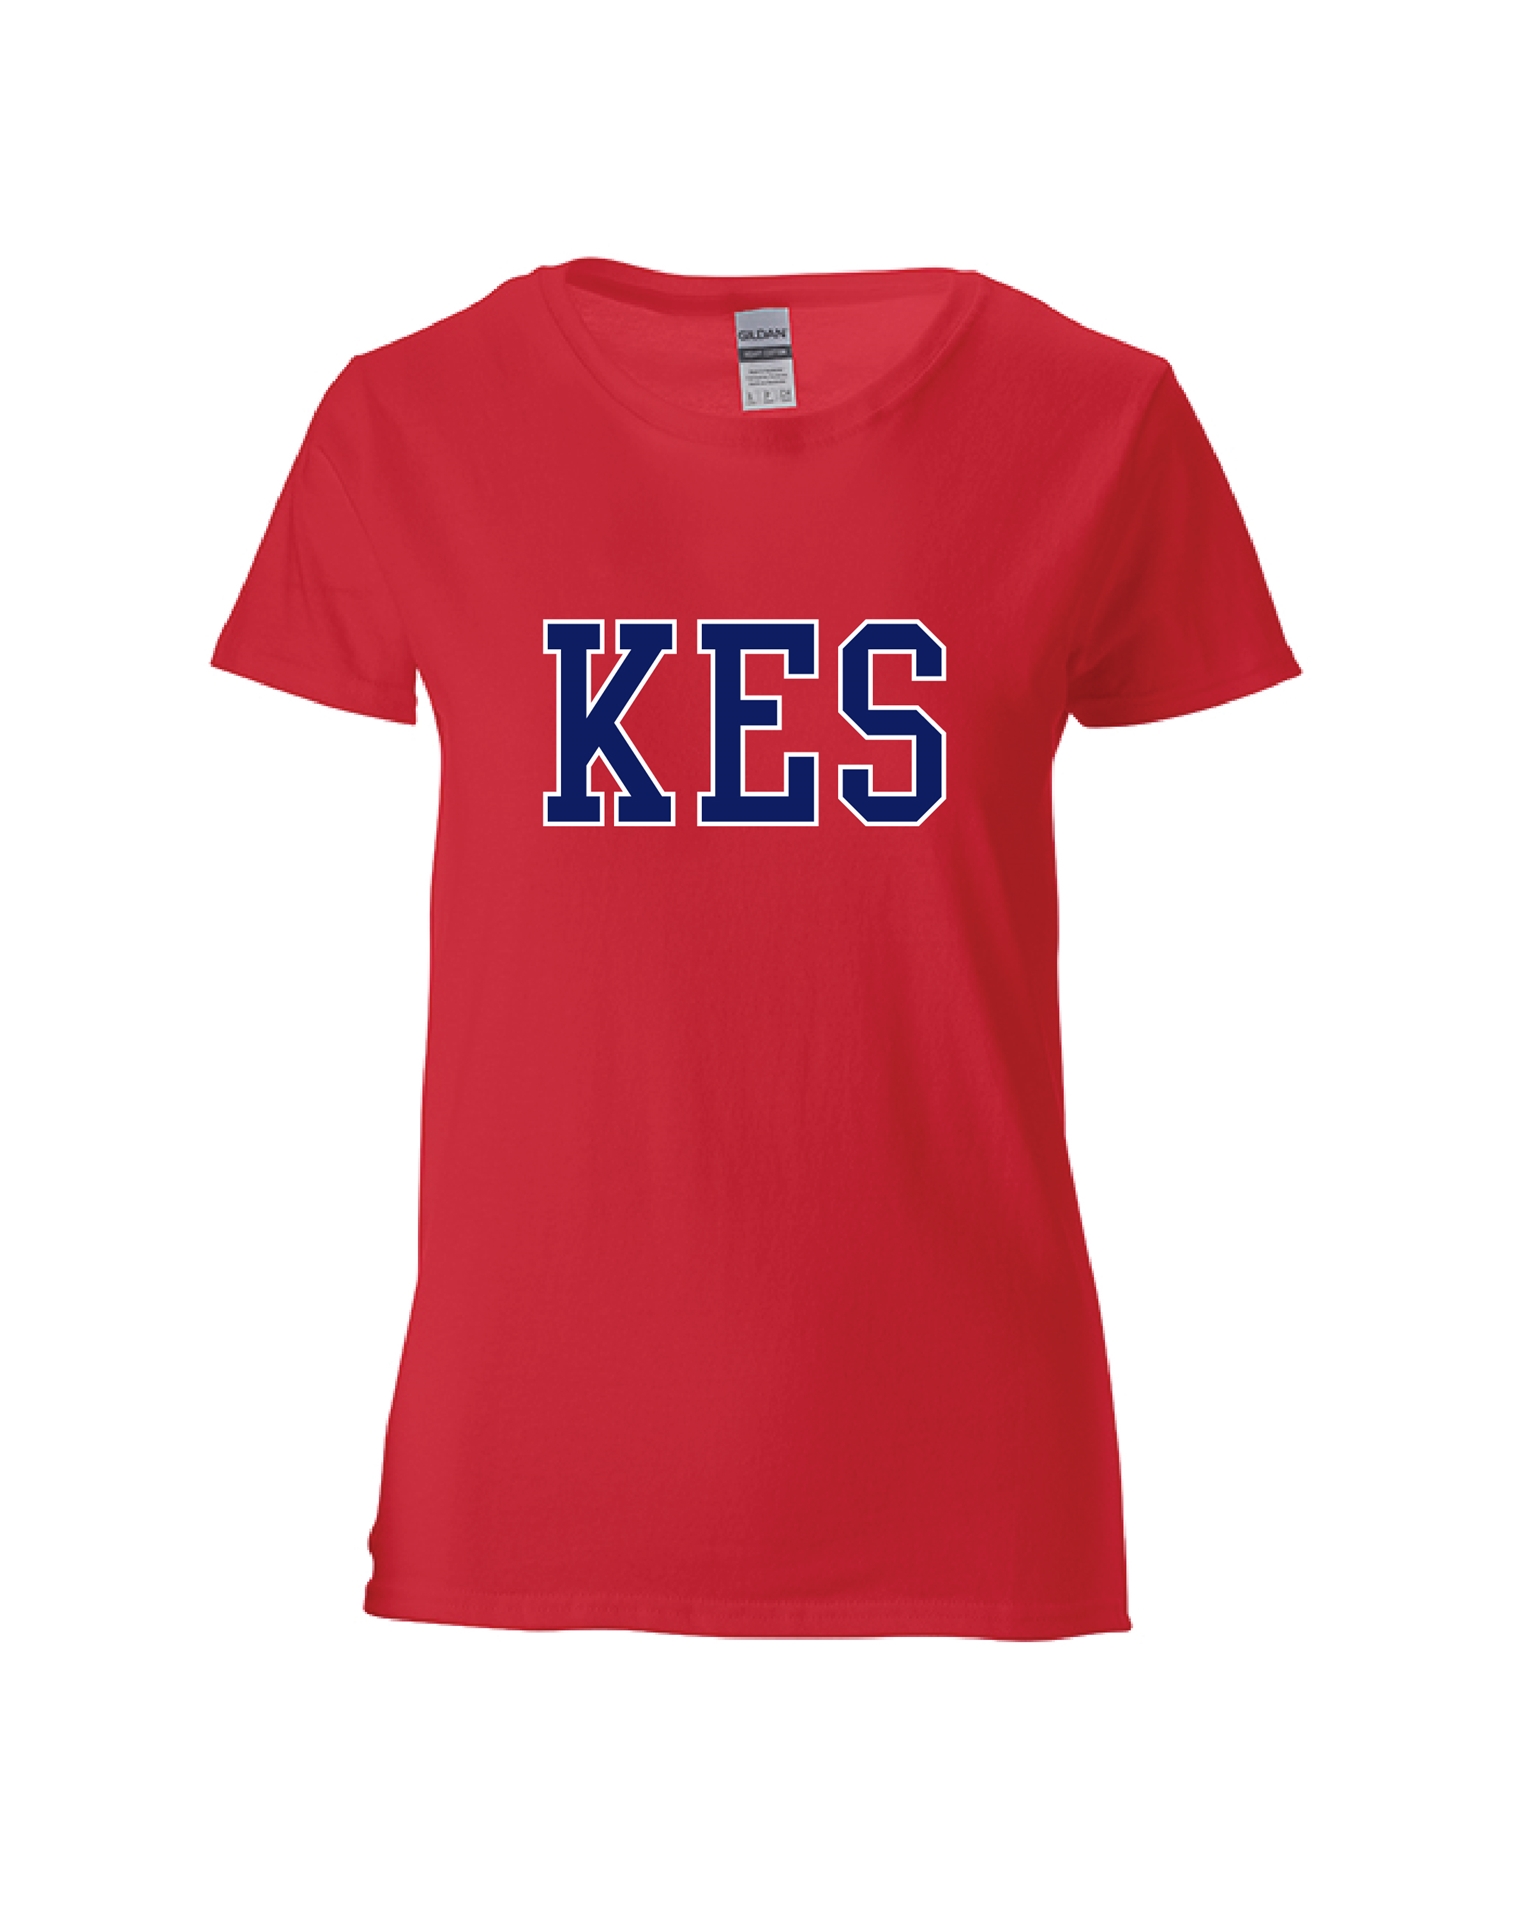 Kings-Edgehill School. KES Red T-Shirt